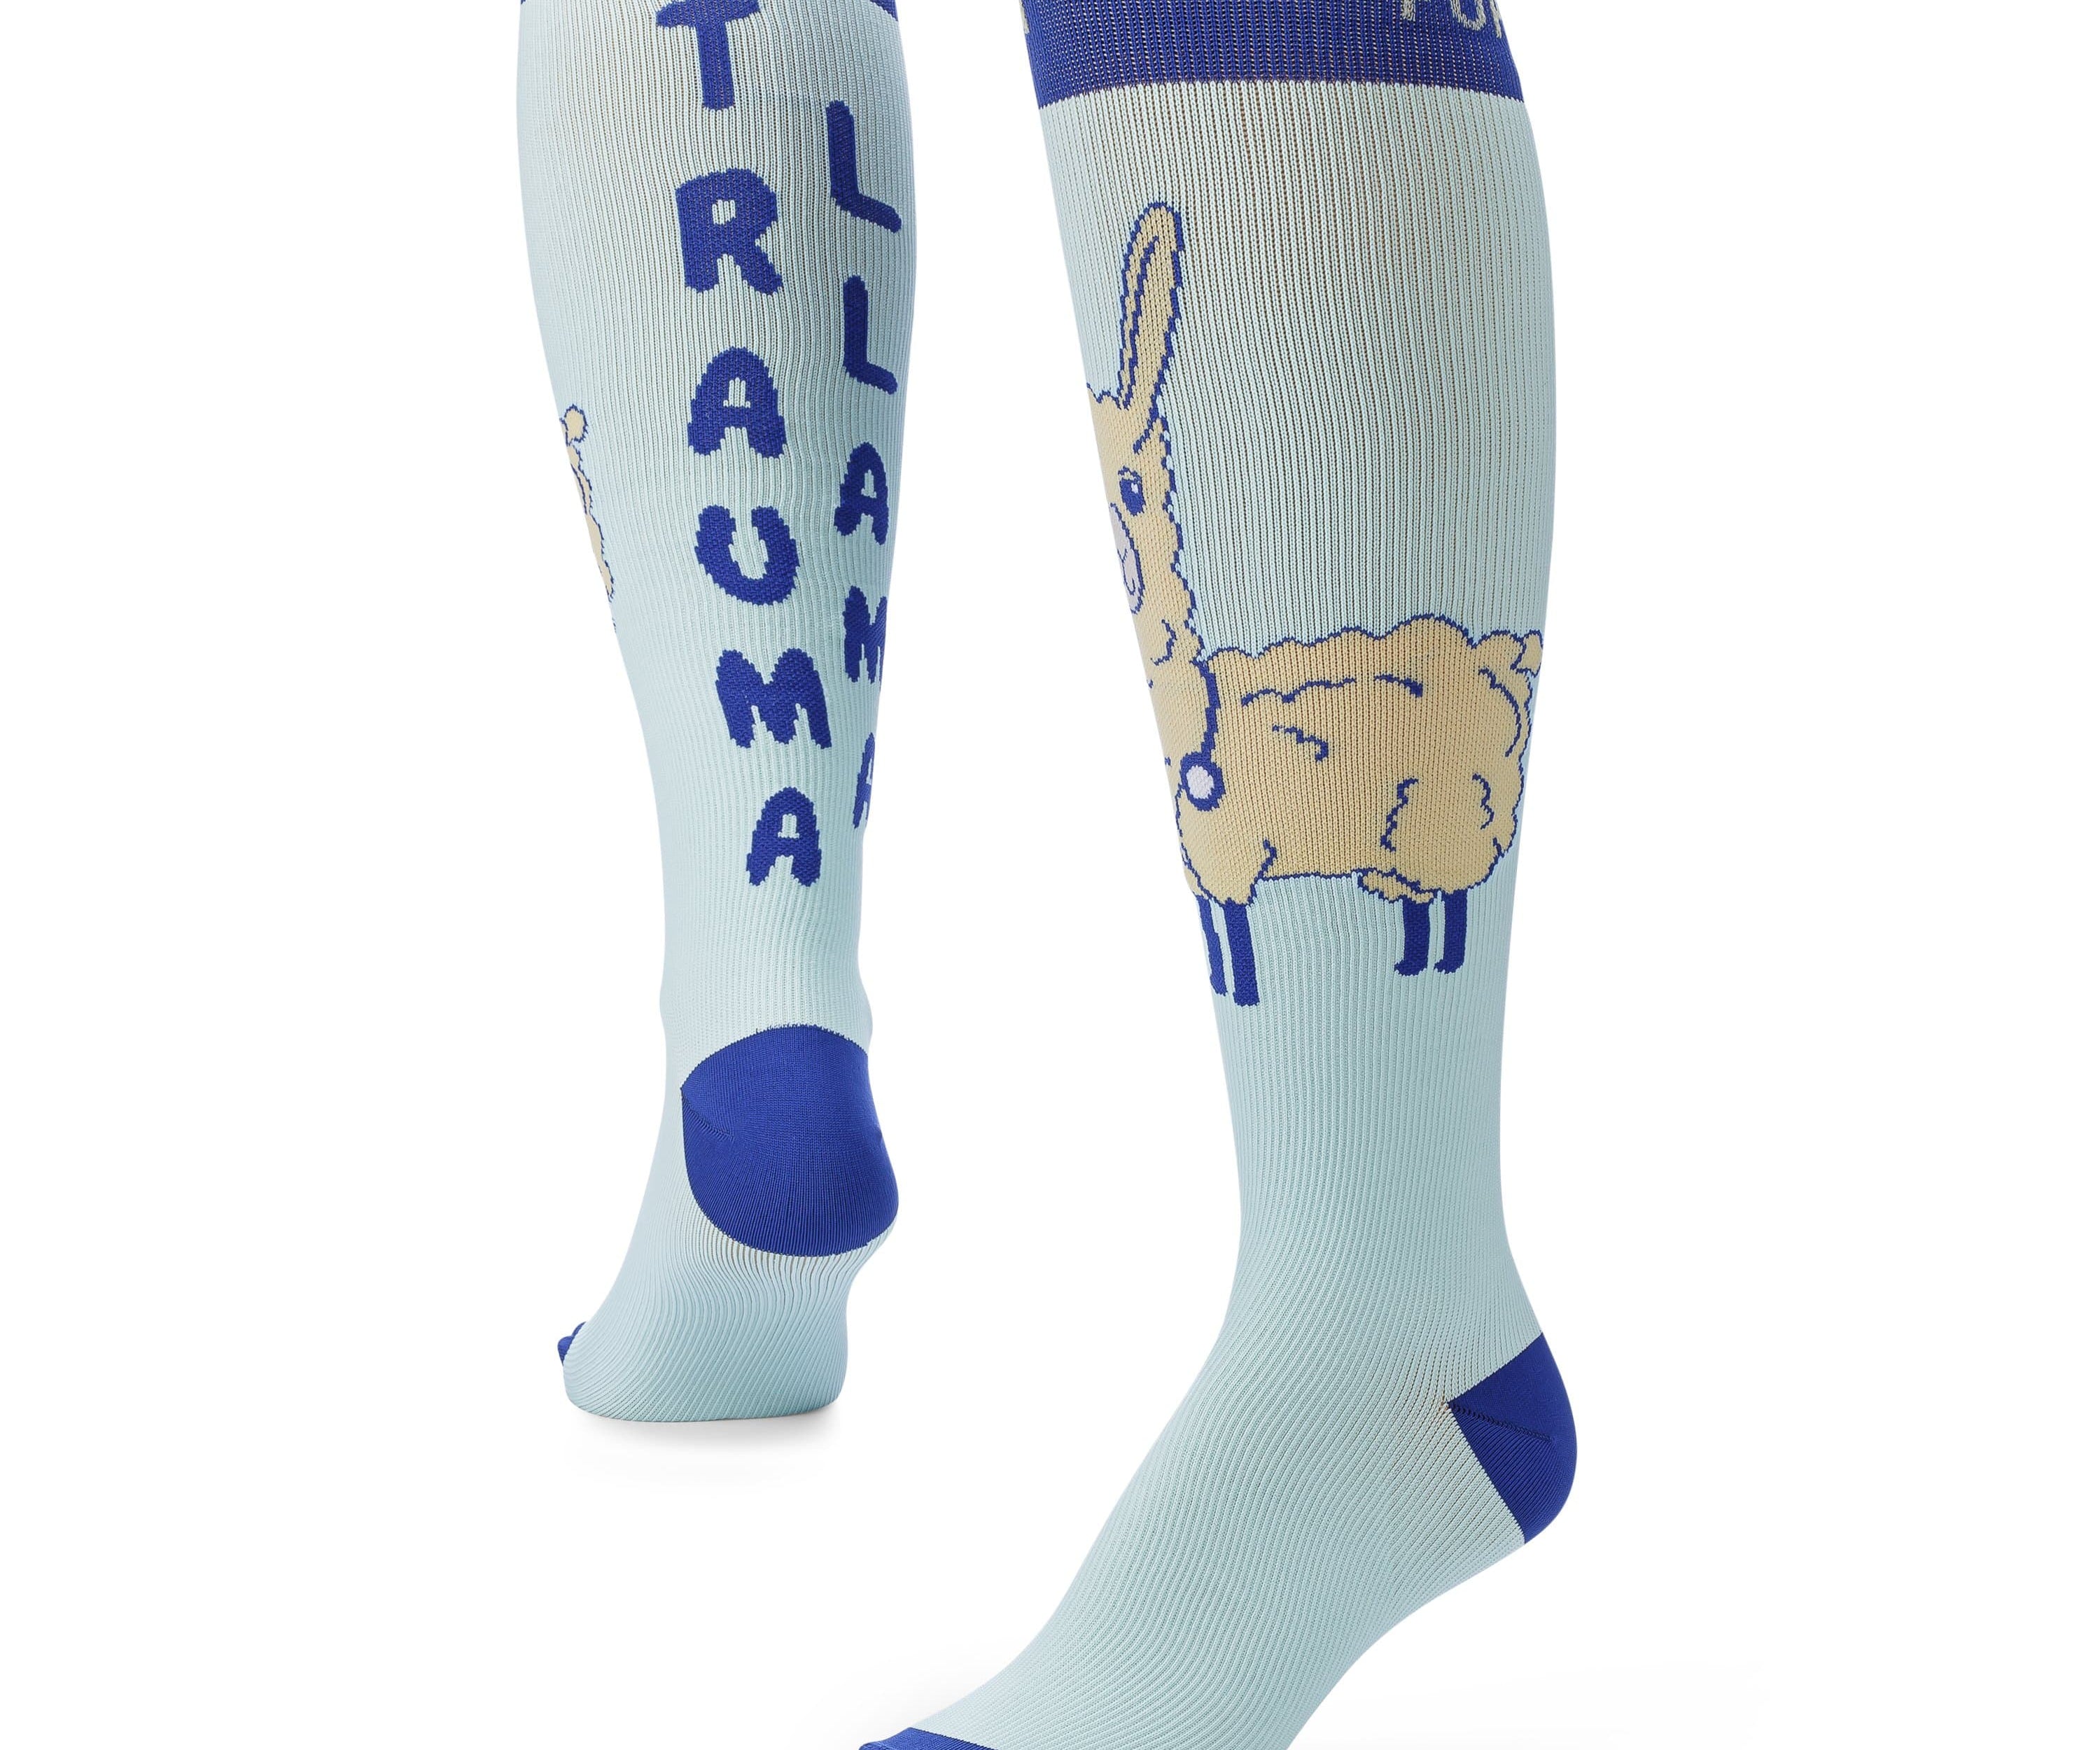 Ankle and heel detail photo for Trauma Llama compression socks.